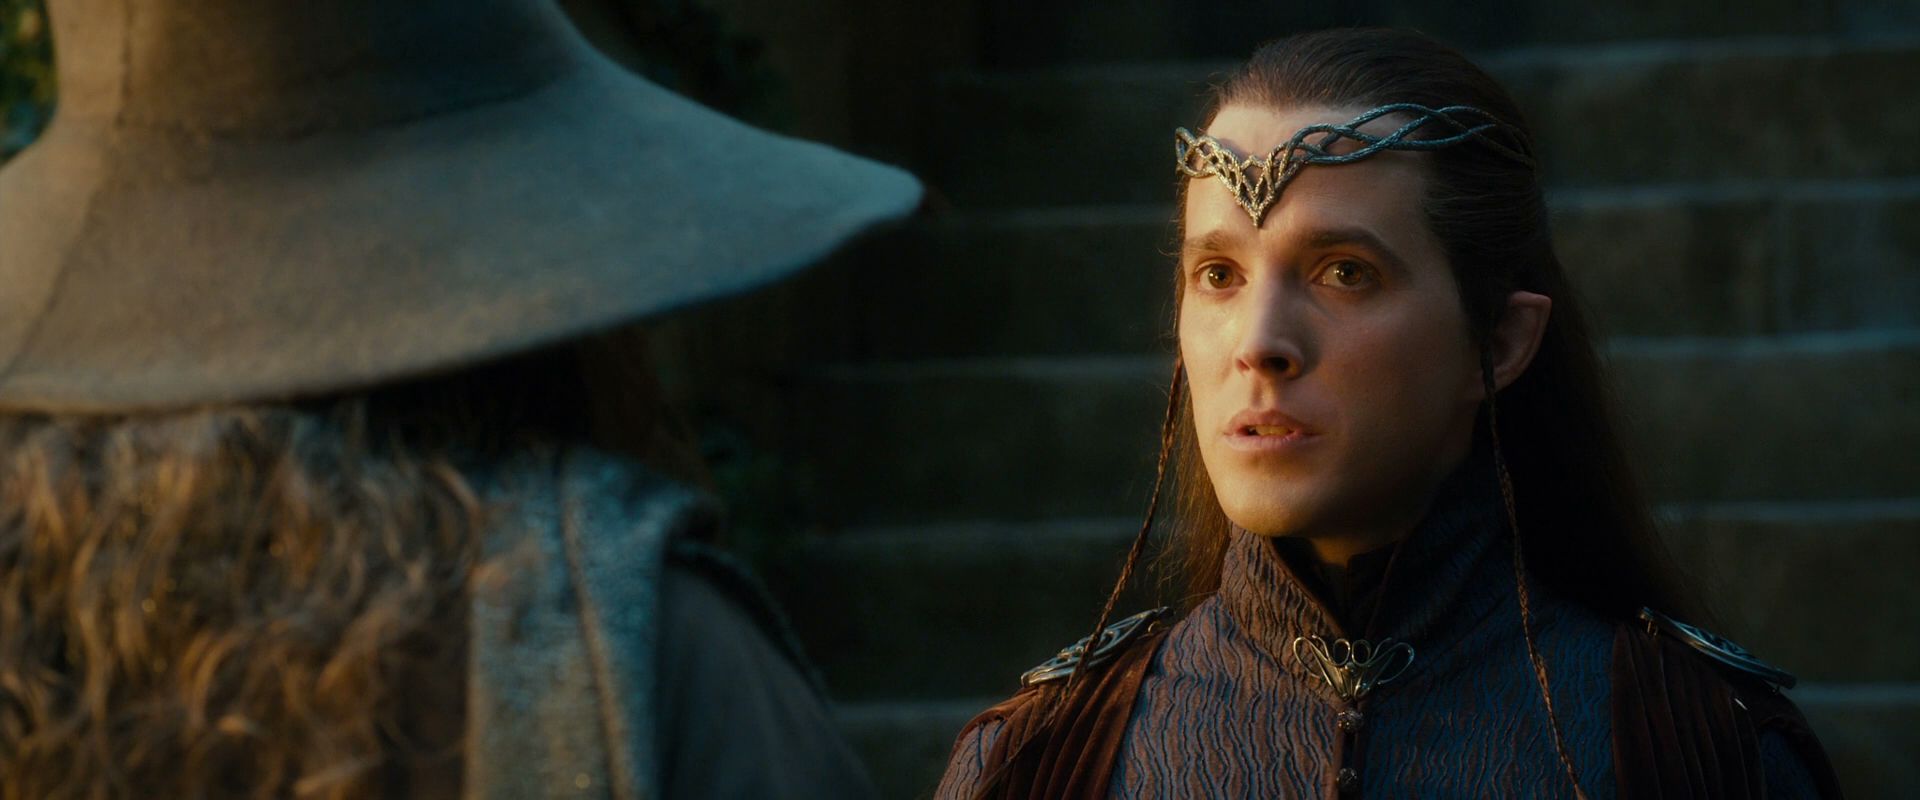 Bret McKenzie as Lindir in The Hobbit